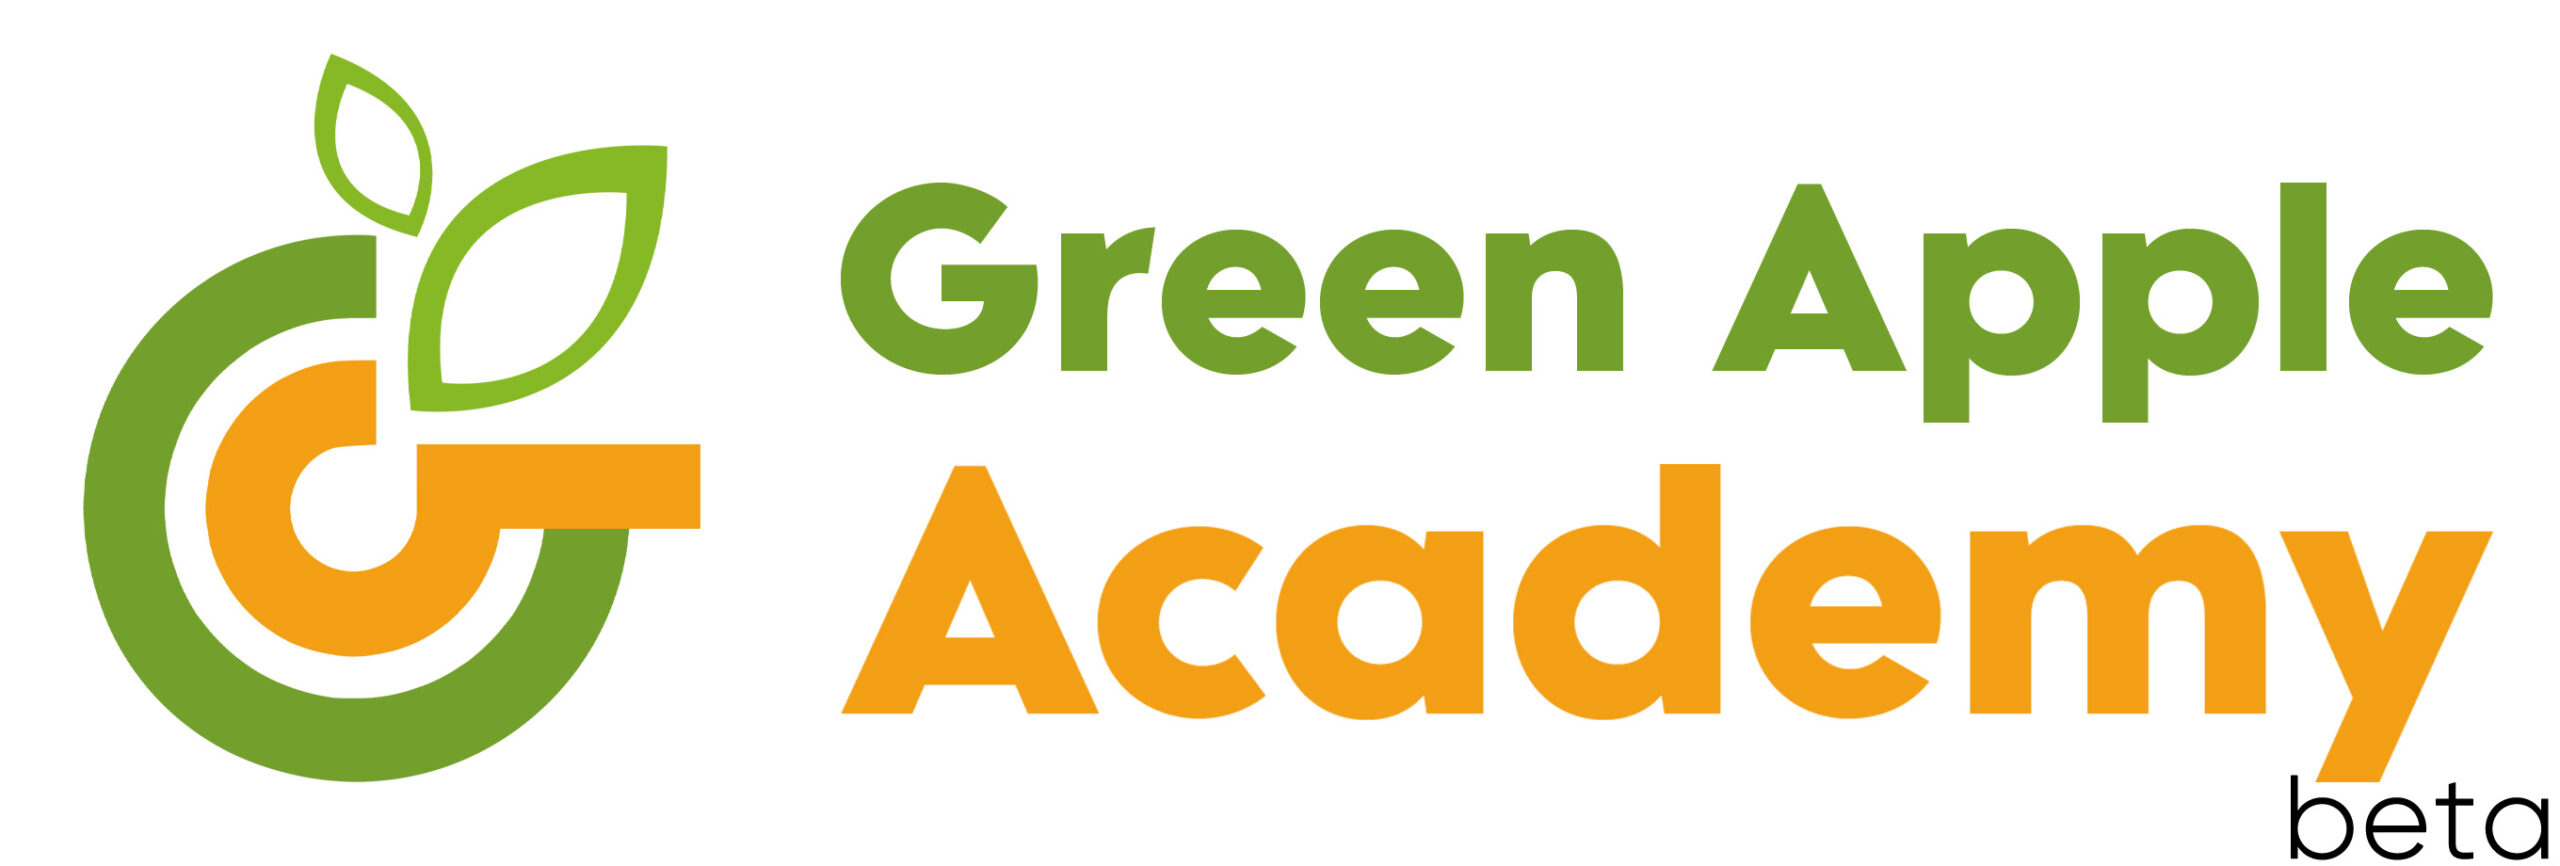 Green Apple Academy